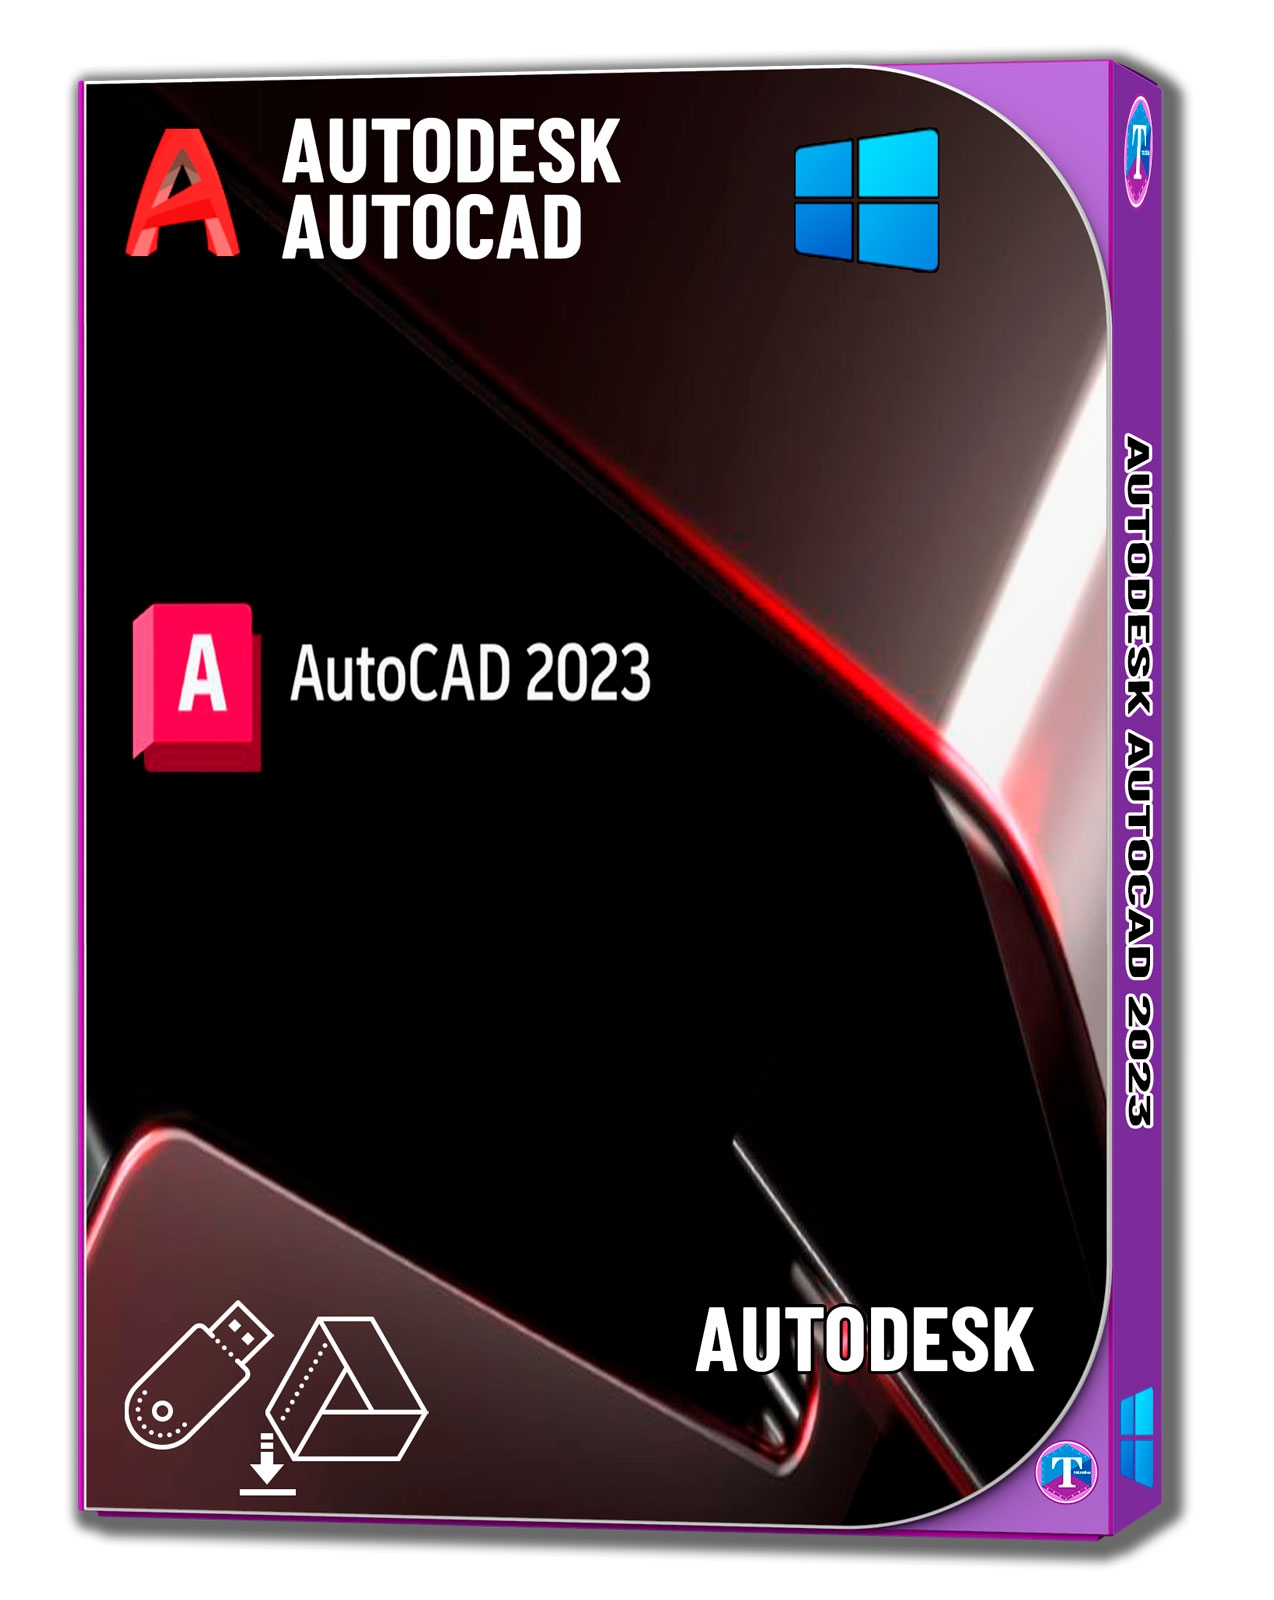 Autodesk AutoCAD 2023 (Español o Ingles) Software CAD 2D y 3D